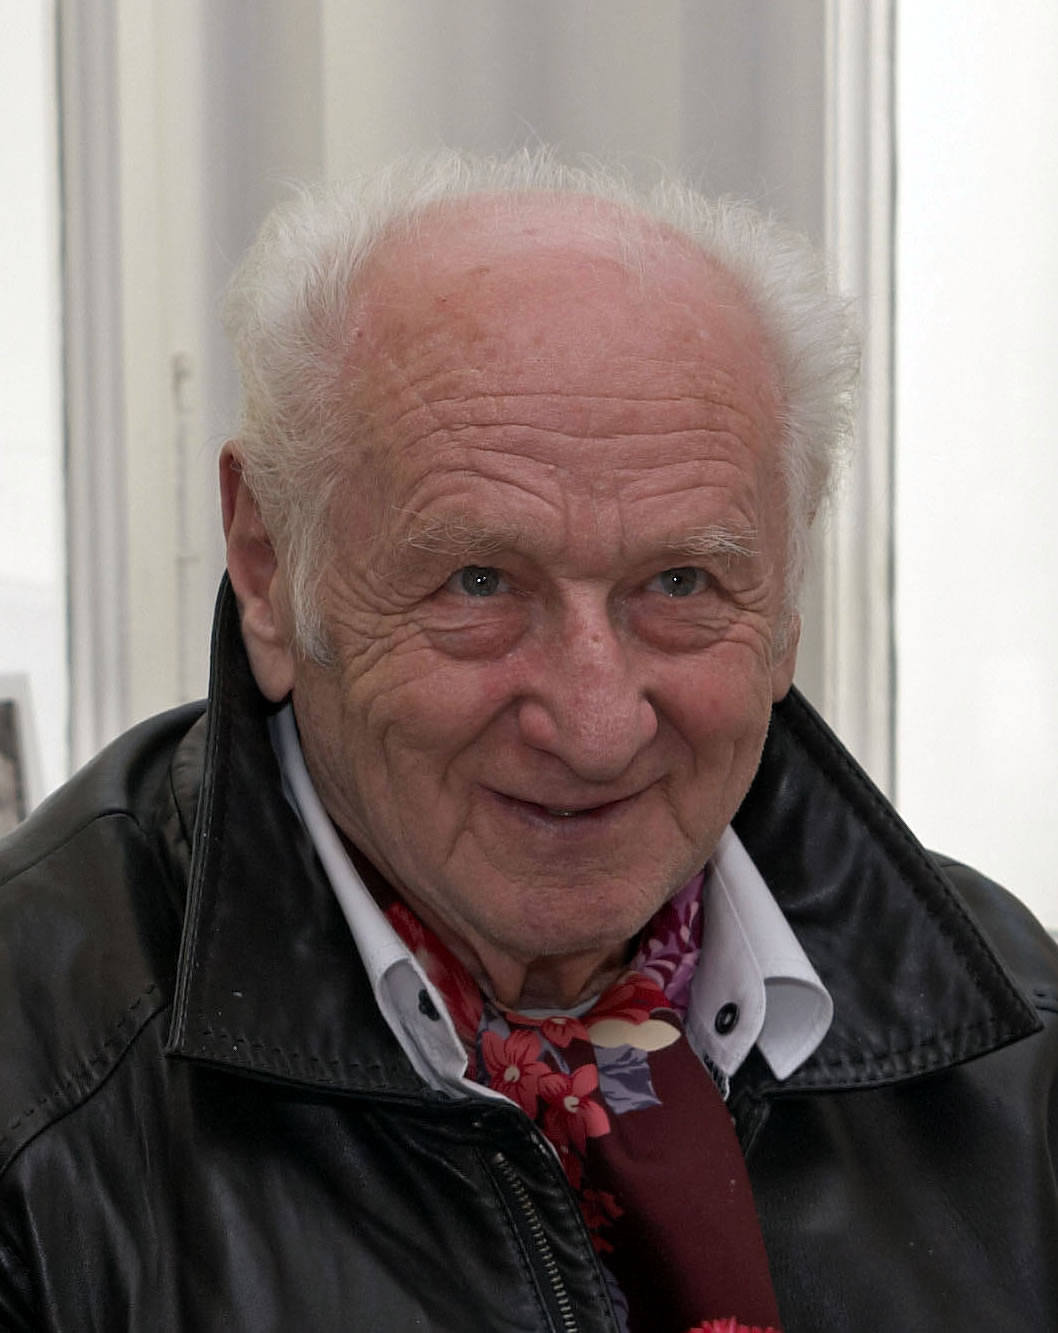 Arnost Lustig in 2009